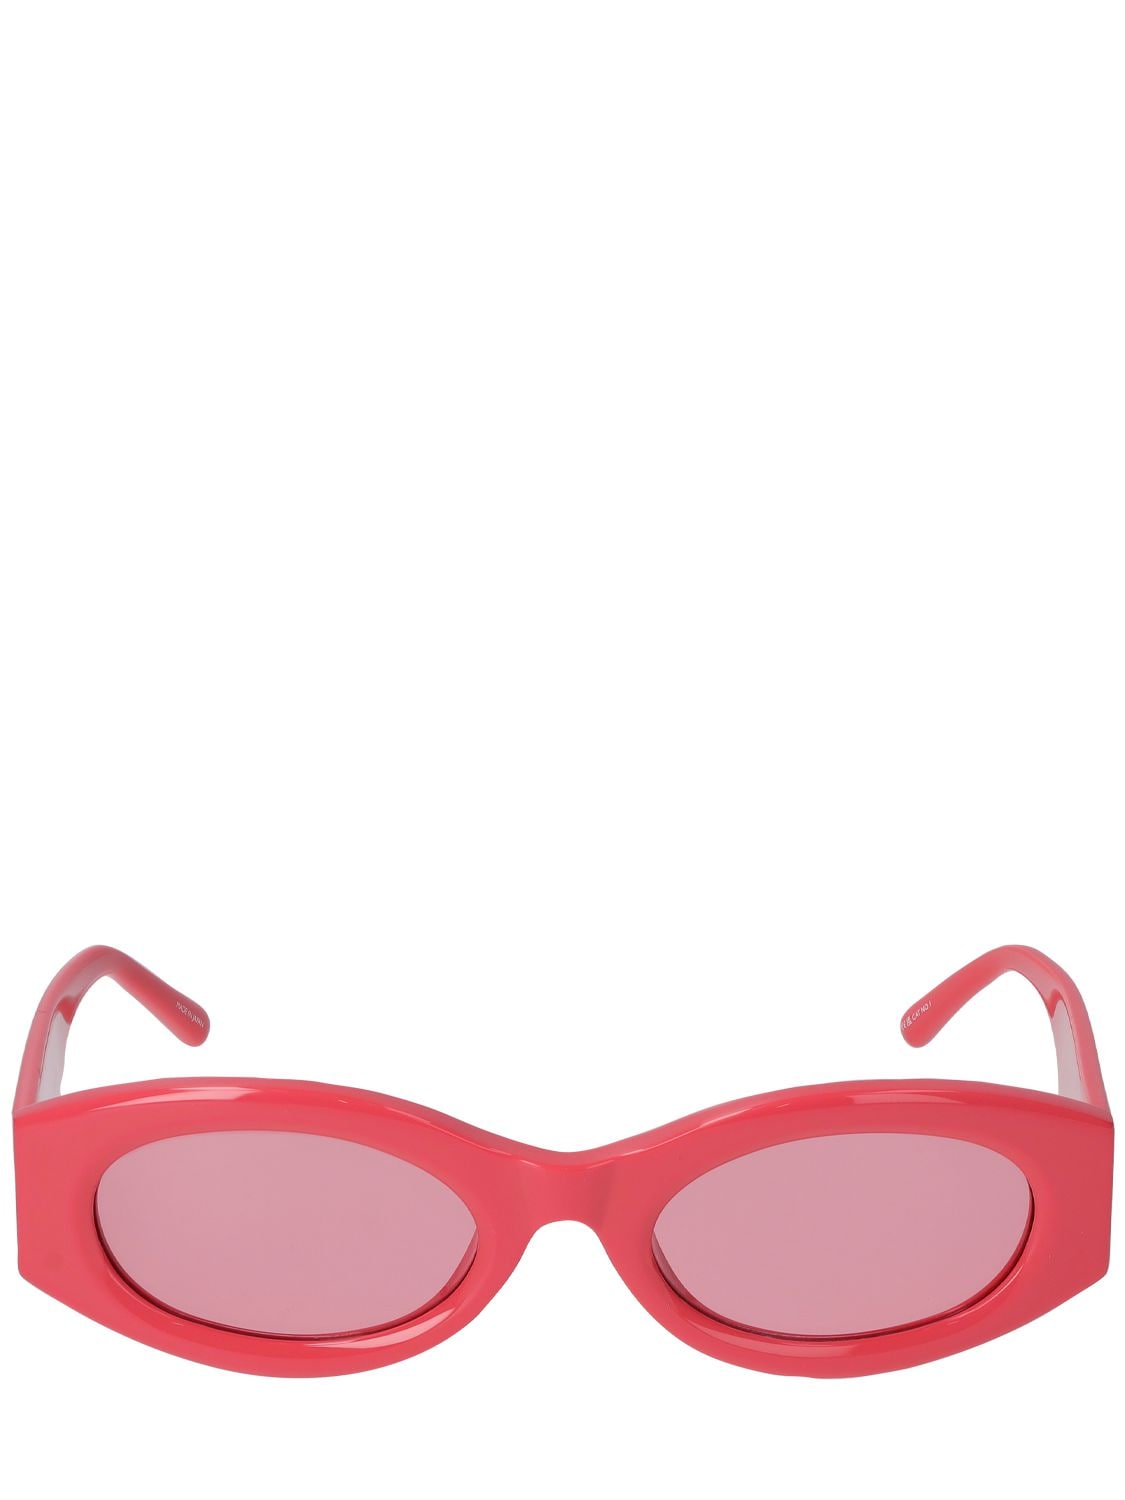 Image of Berta Oval Acetate Sunglasses